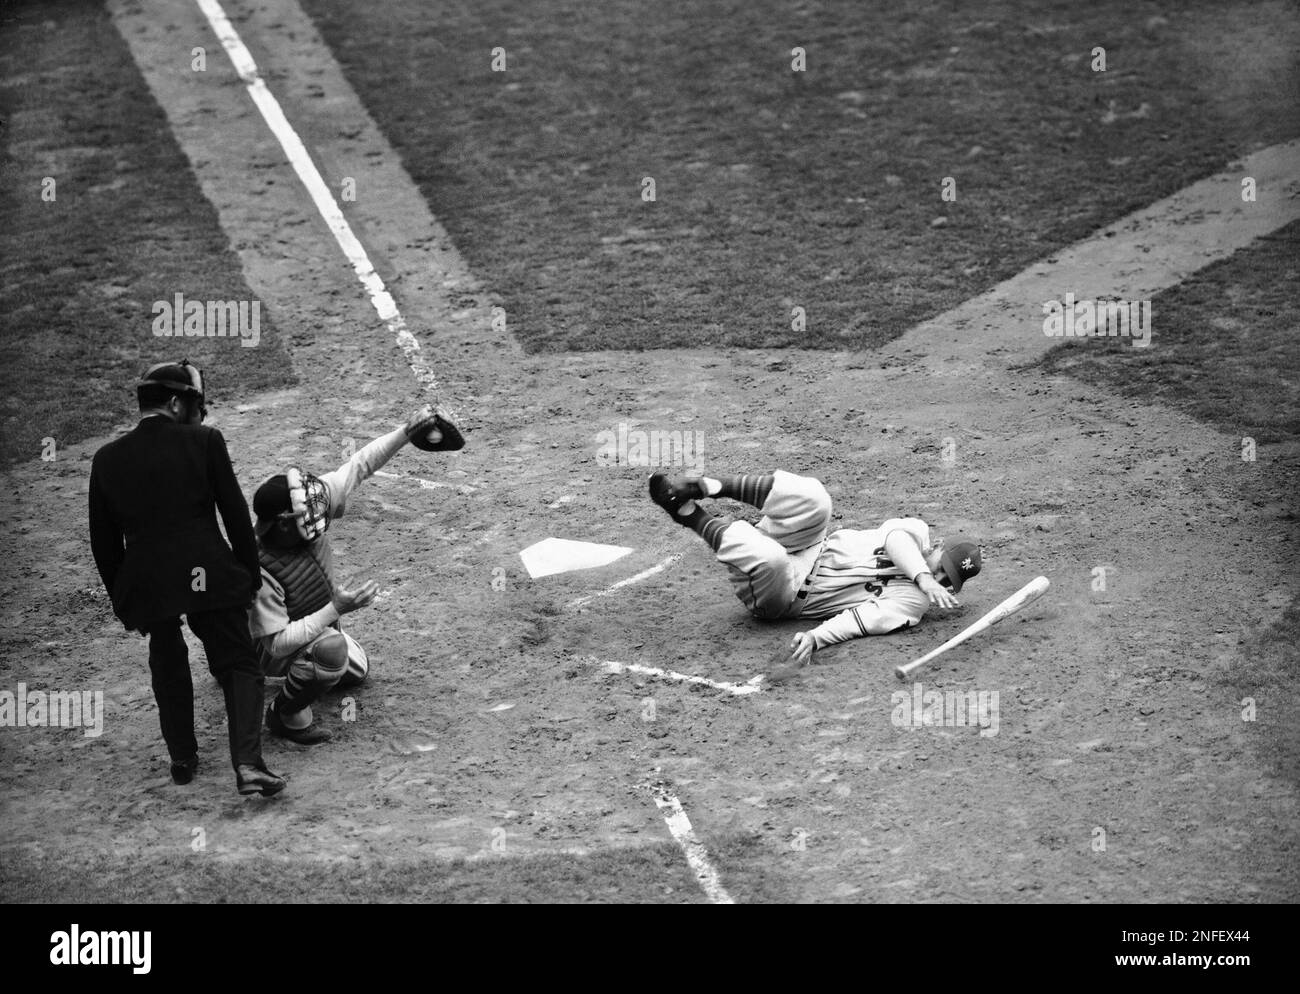 1942 Johnny Mize Game Worn New York Giants Jersey..  Baseball, Lot  #50347